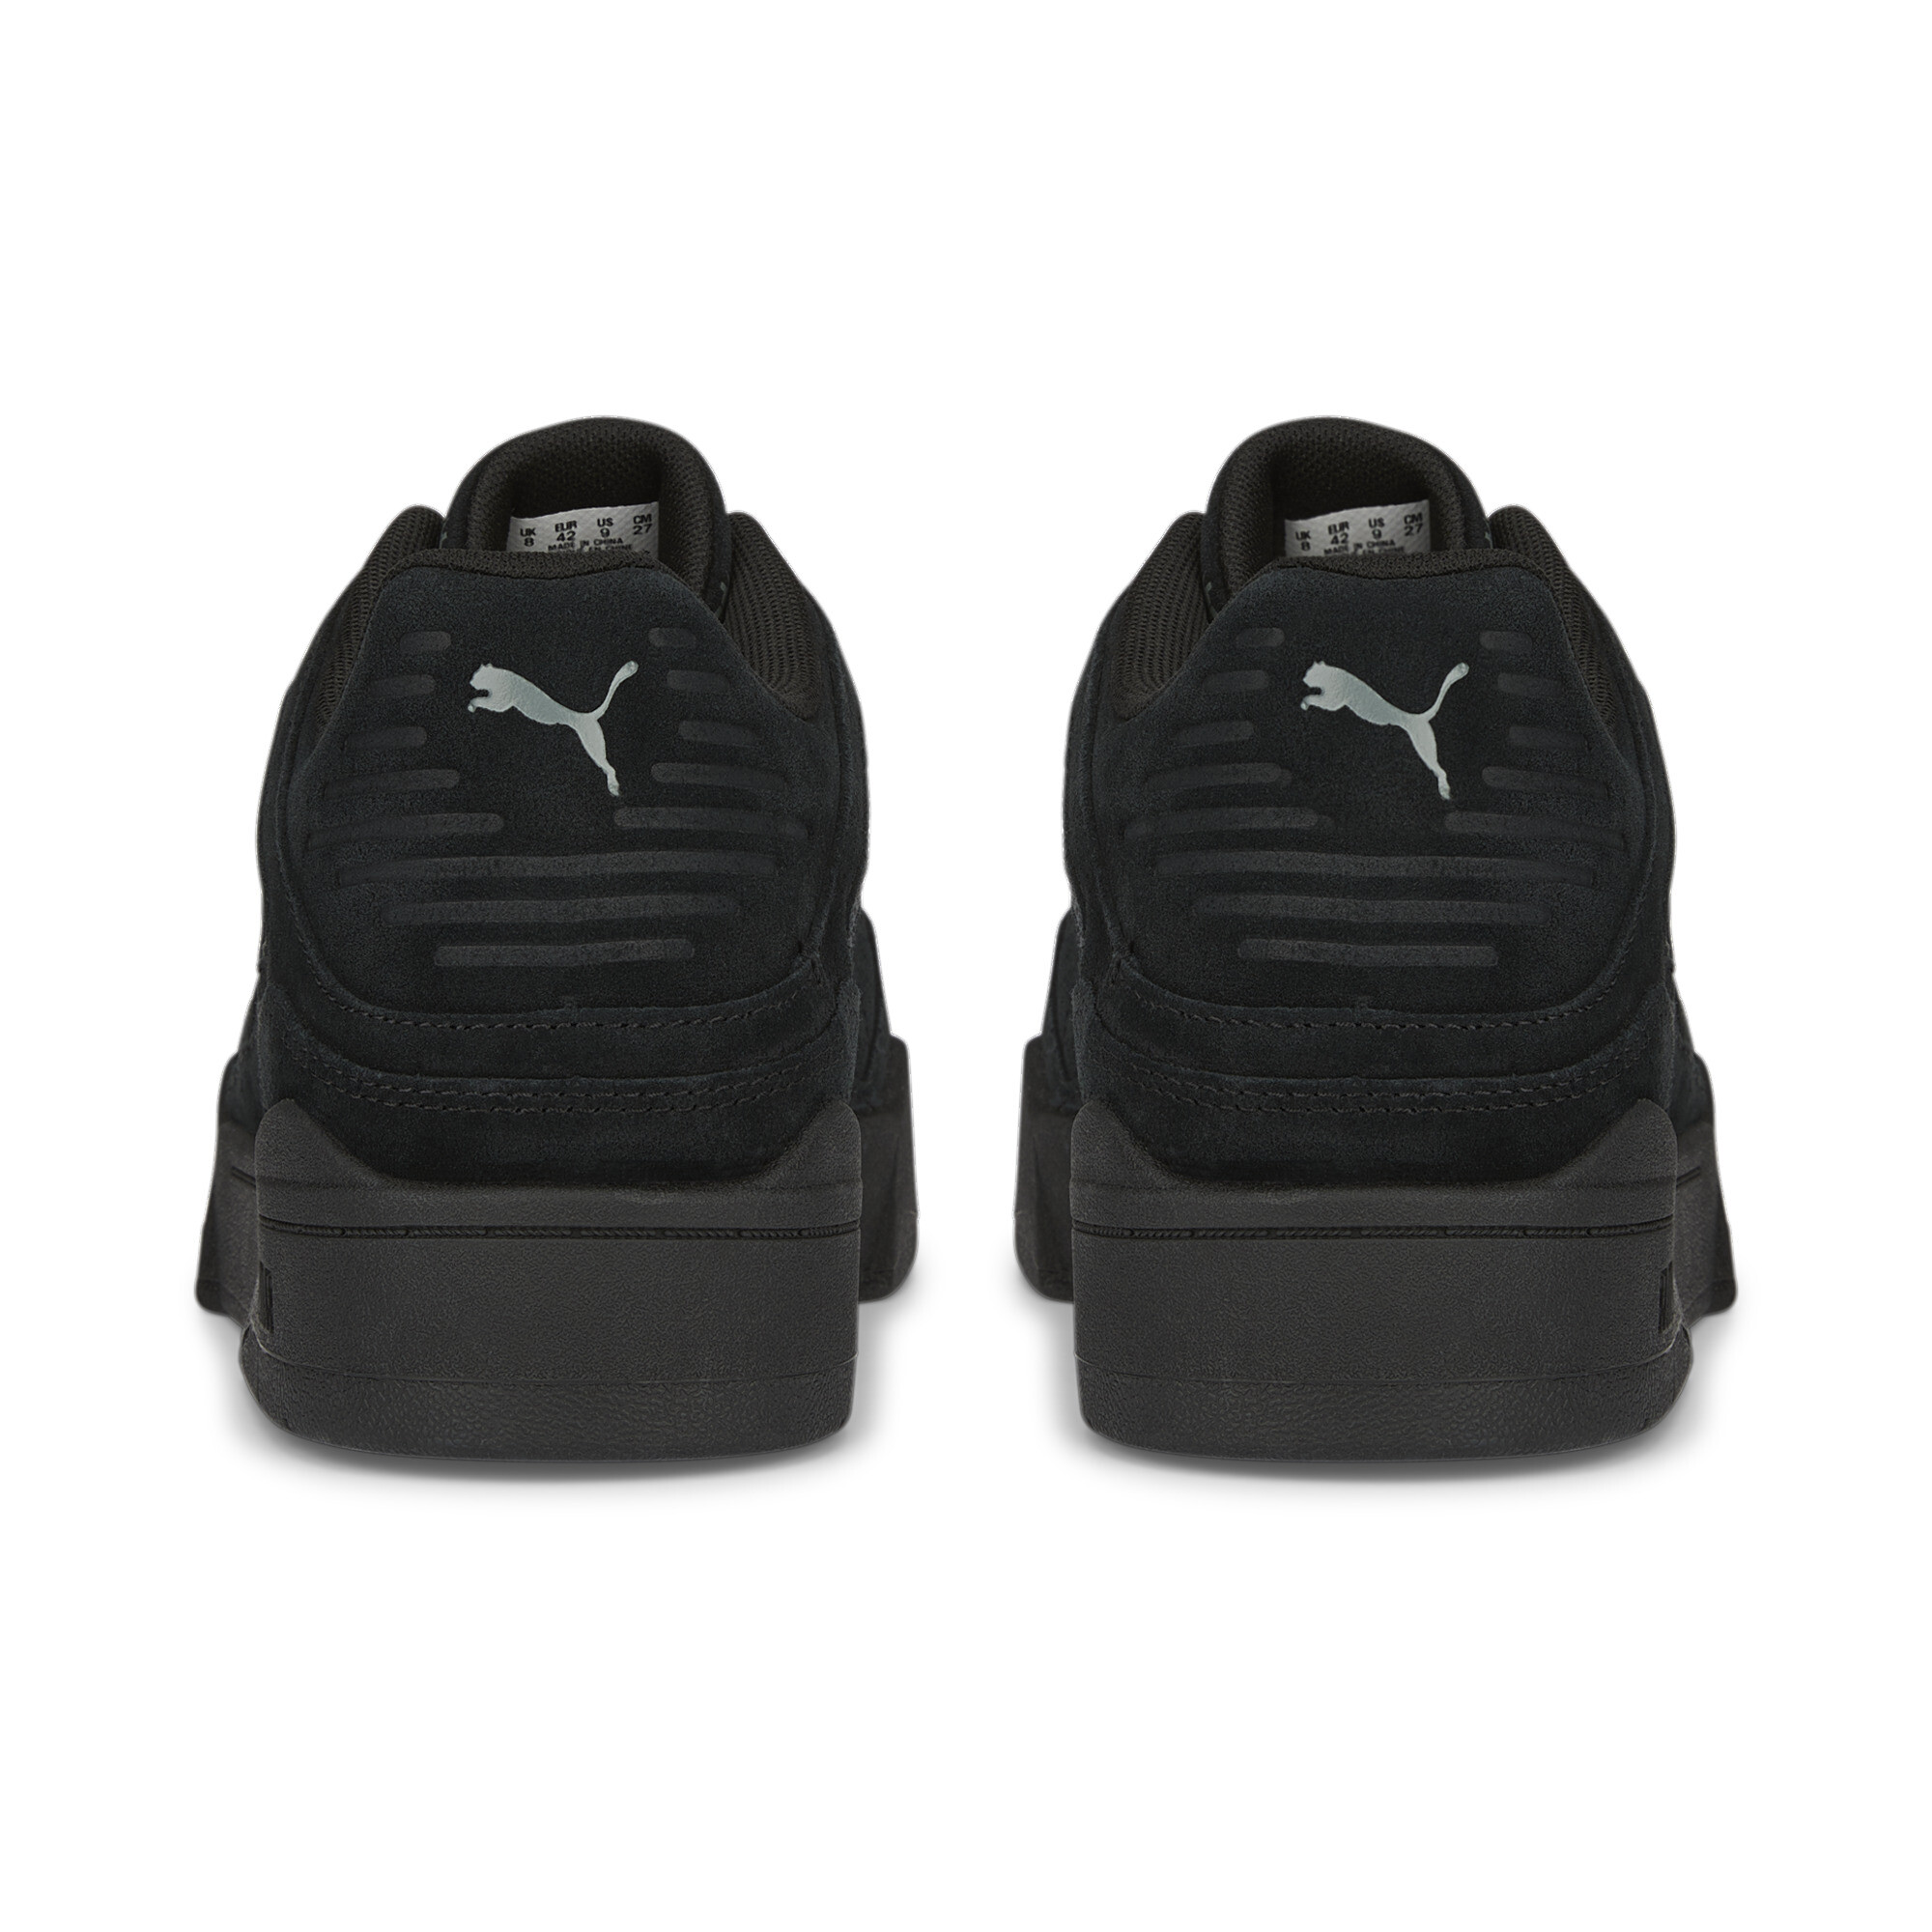 Men's PUMA Slipstream Trend 7etter Sneakers In Black, Size EU 47